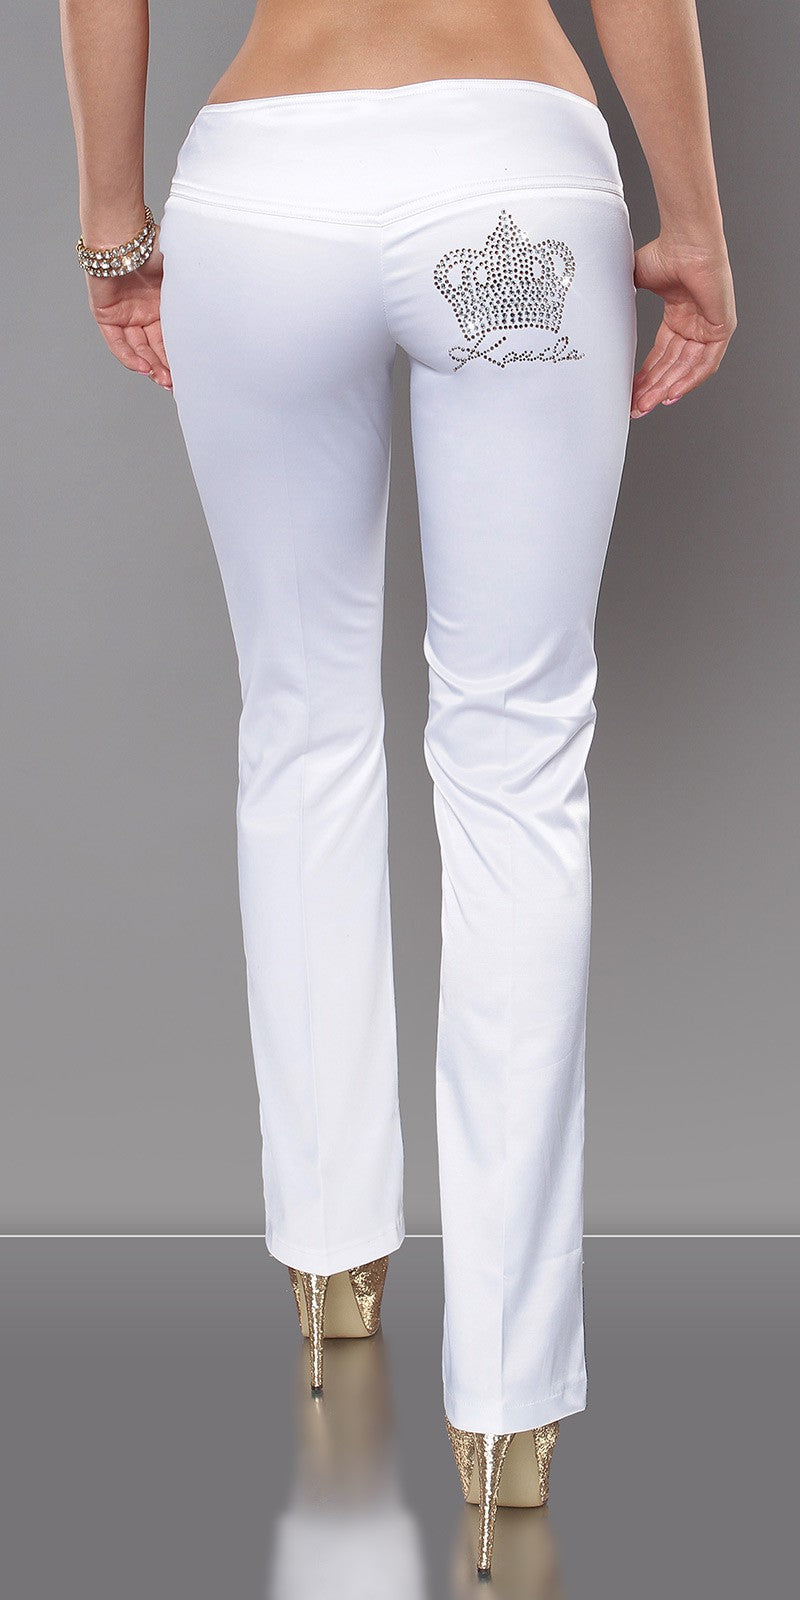 Pantaloni bianchi 0000ISF-LMR035